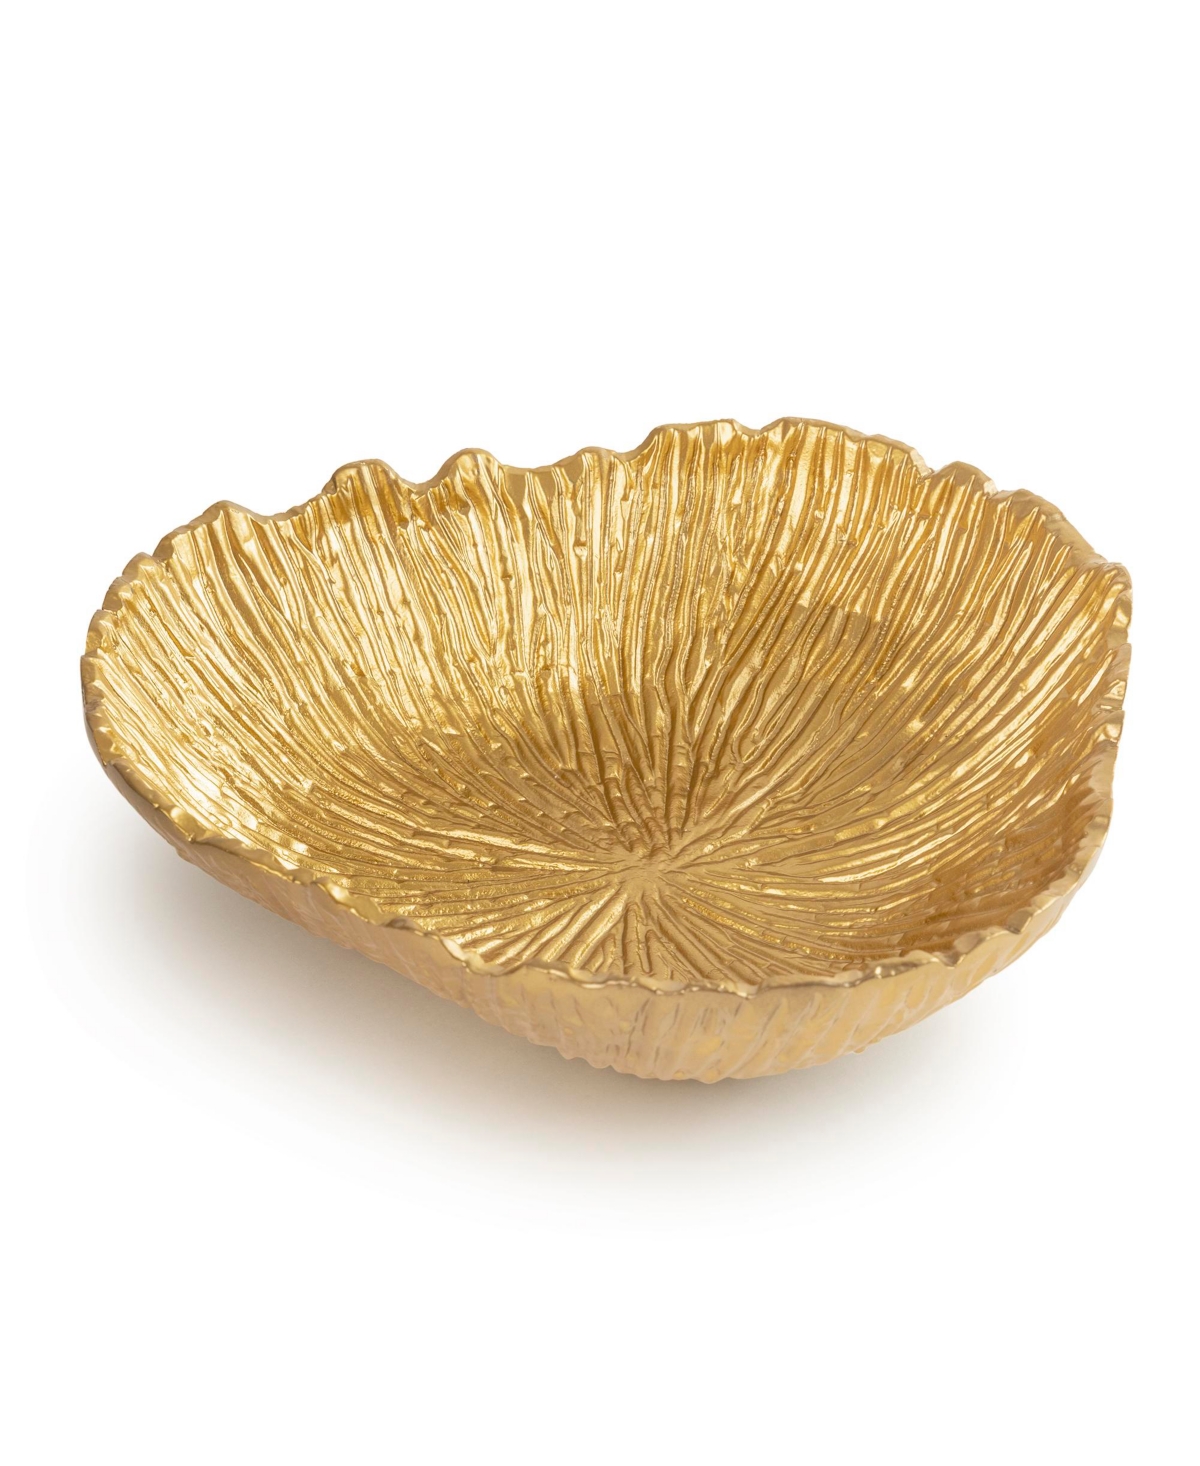 Hudson Decorative Bowl - Gold Large - Gold